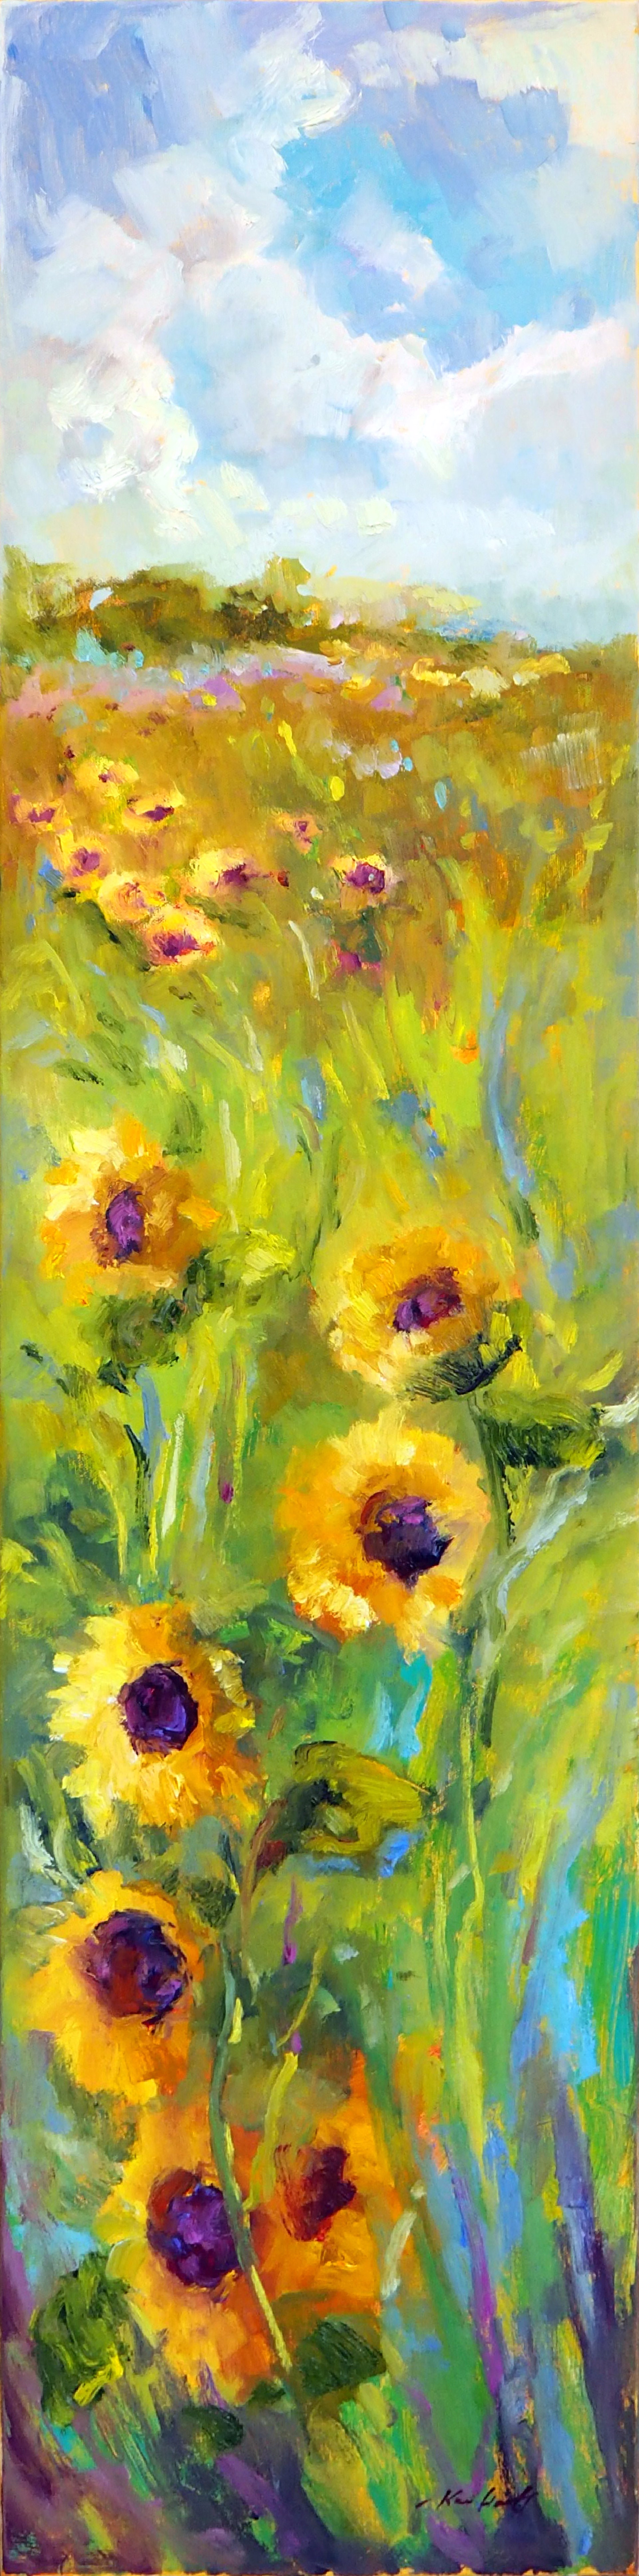 Allison's Sunflowers by Karen Hewitt Hagan